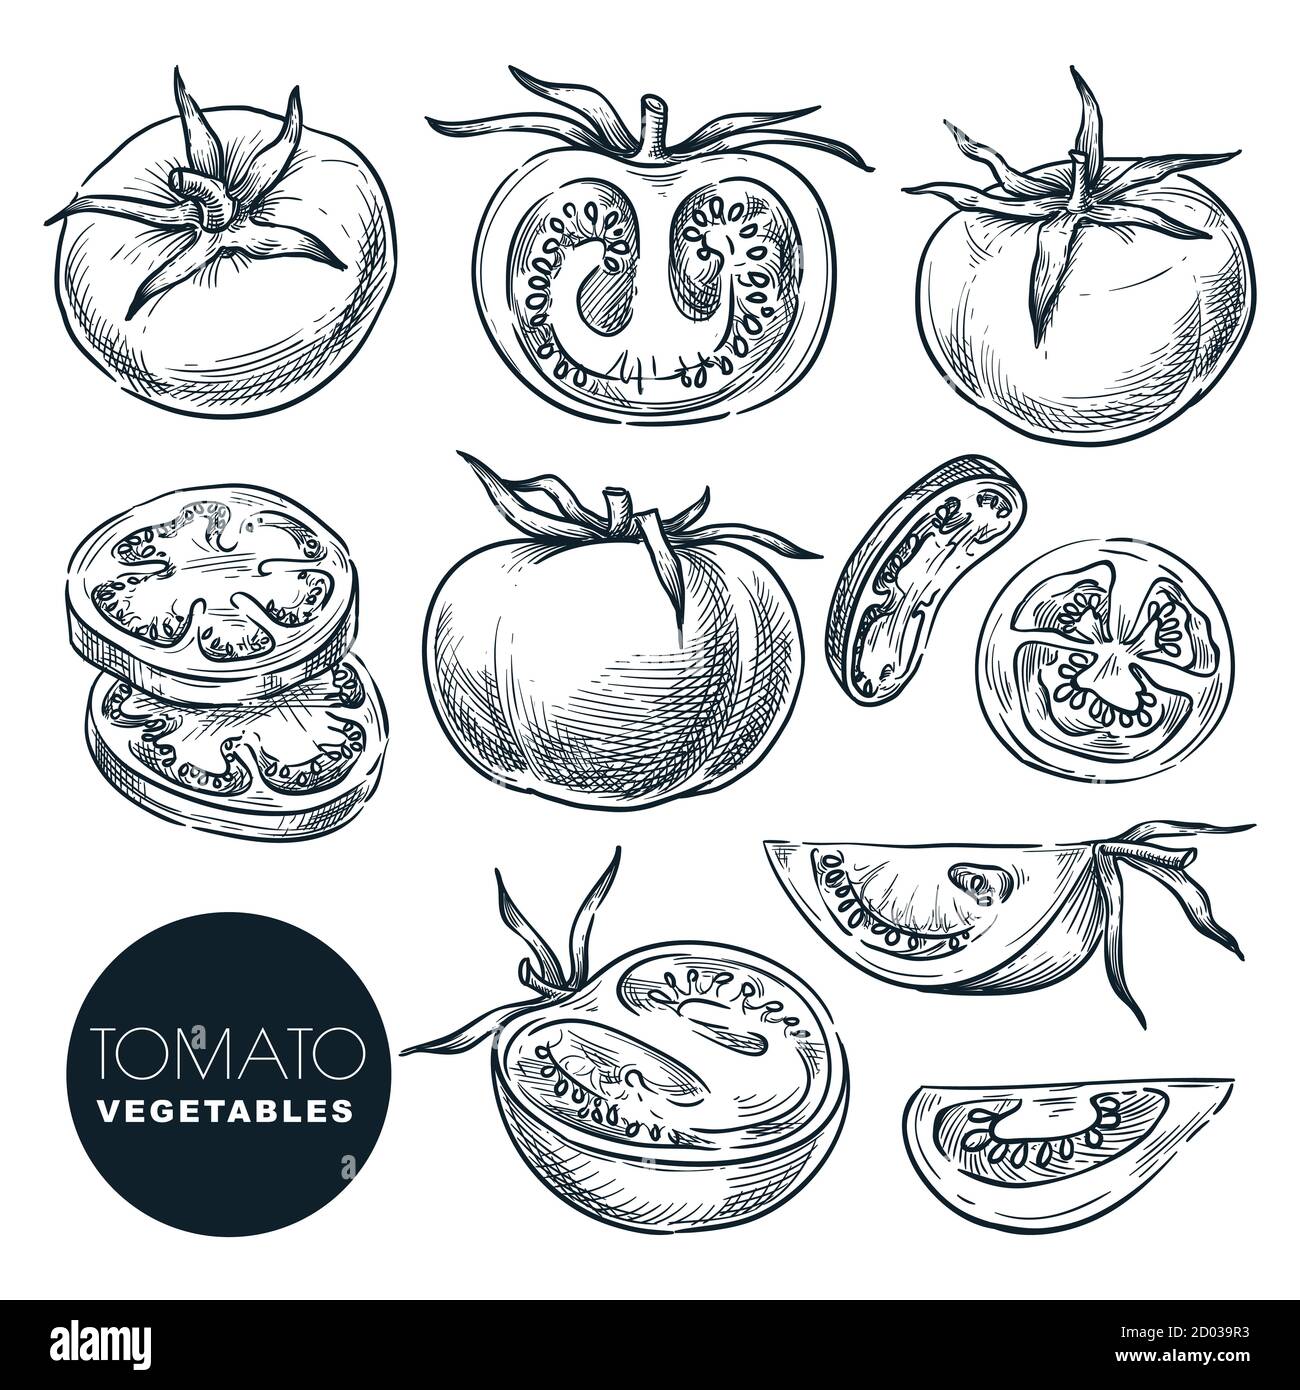 tomato line drawing